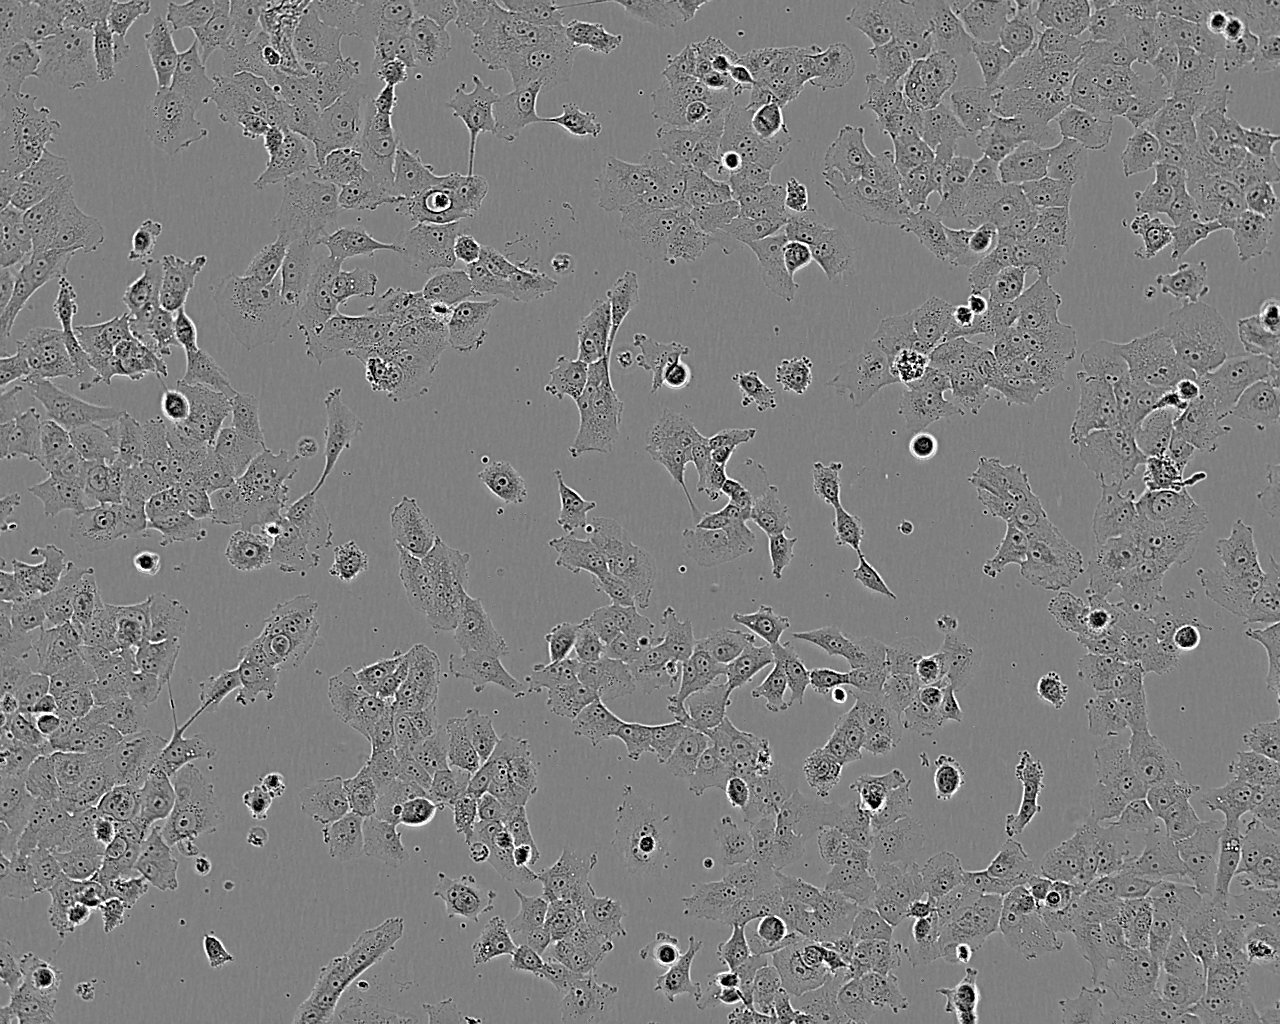 PC-9 epithelioid cells人肺腺癌细胞系,PC-9 epithelioid cells